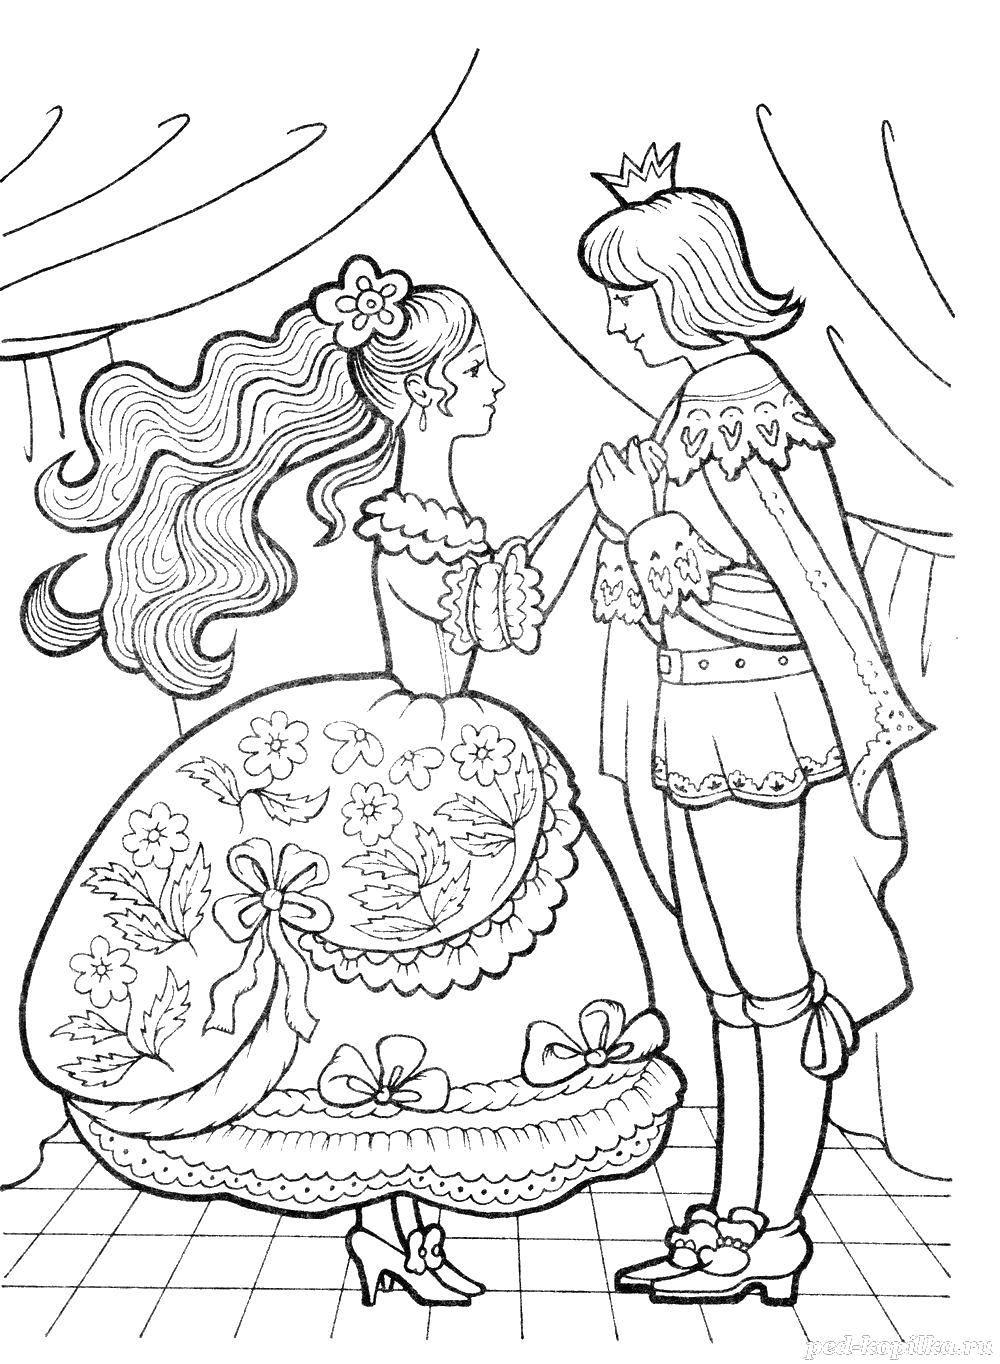 Название: Раскраска Принц и принцесса на балу. Категория: принцесса. Теги: Принцесса, принц.